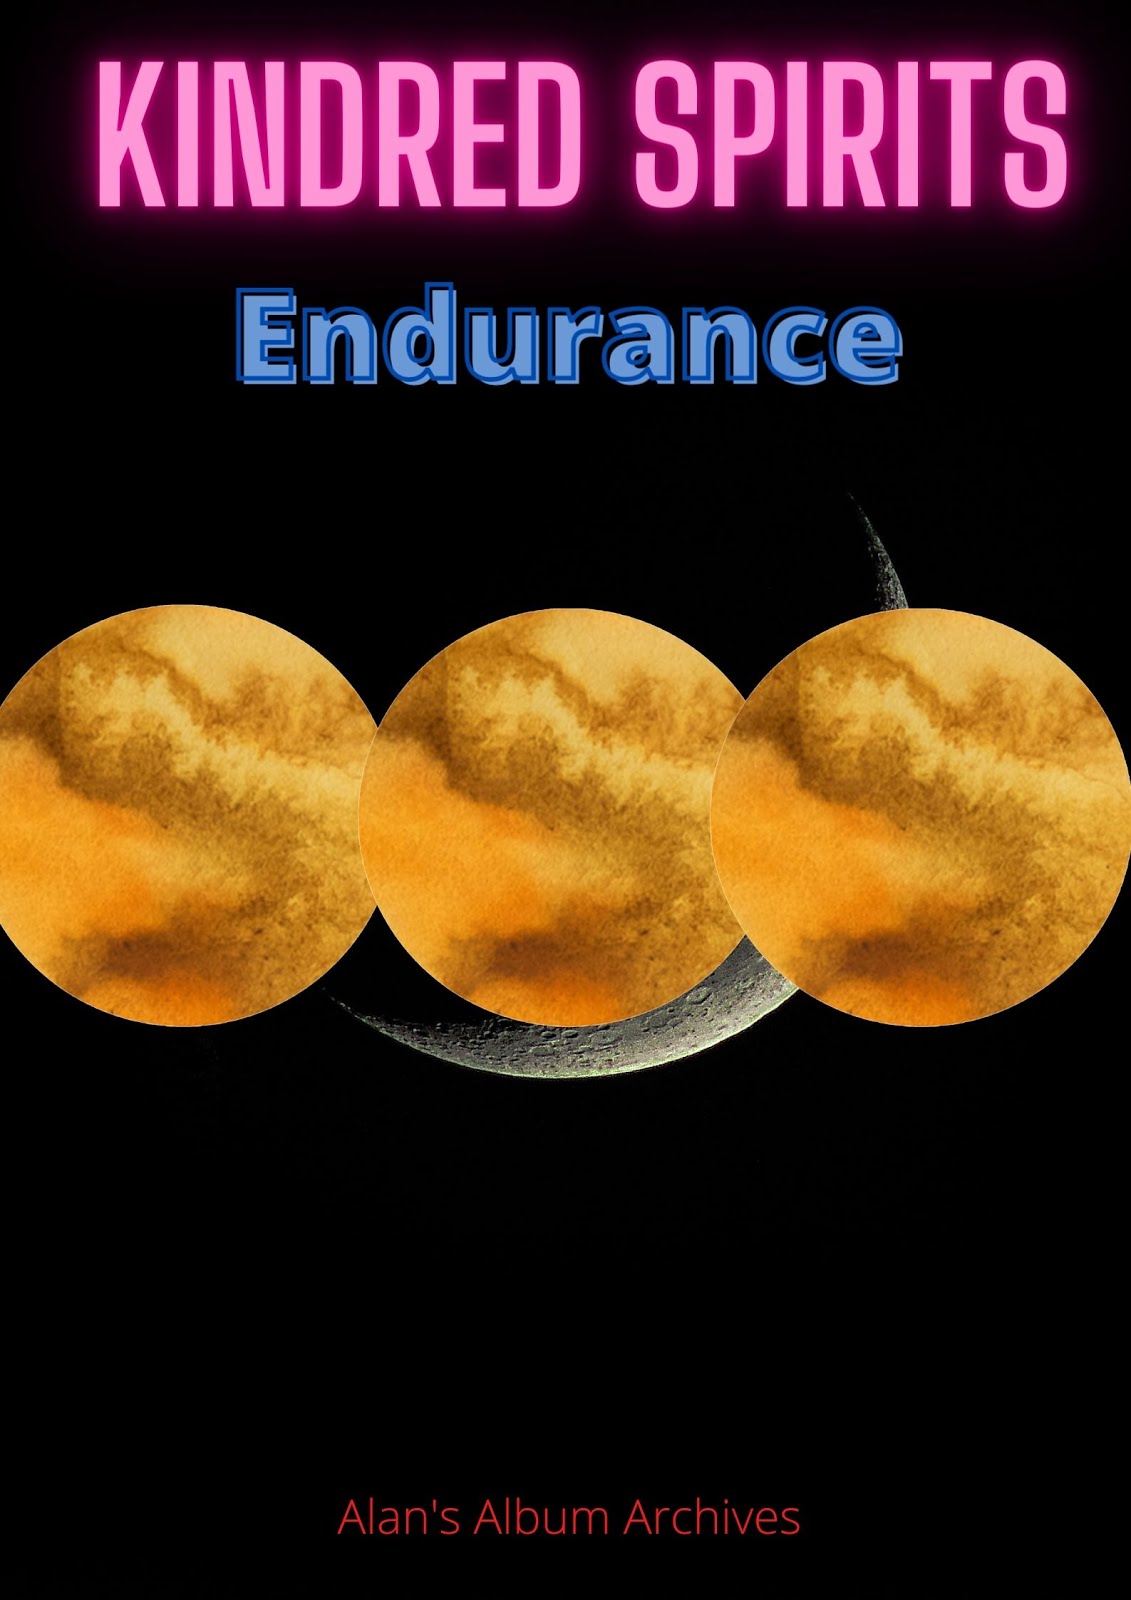 'Endurance'